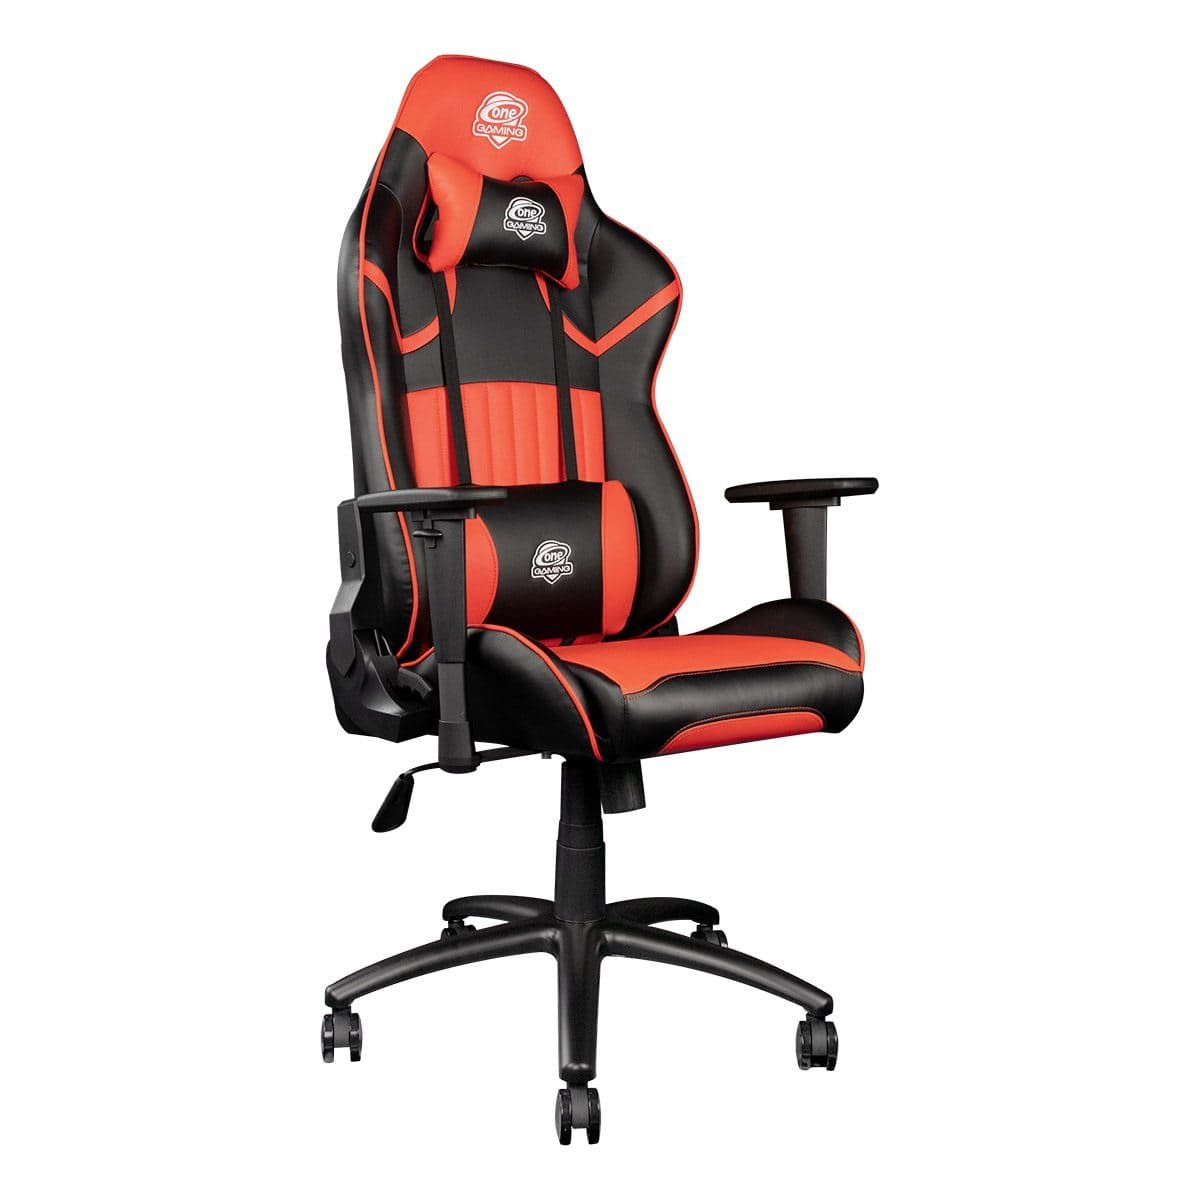 ONE GAMING schwarz Chair rot Red Stuhl, / Gaming Pro